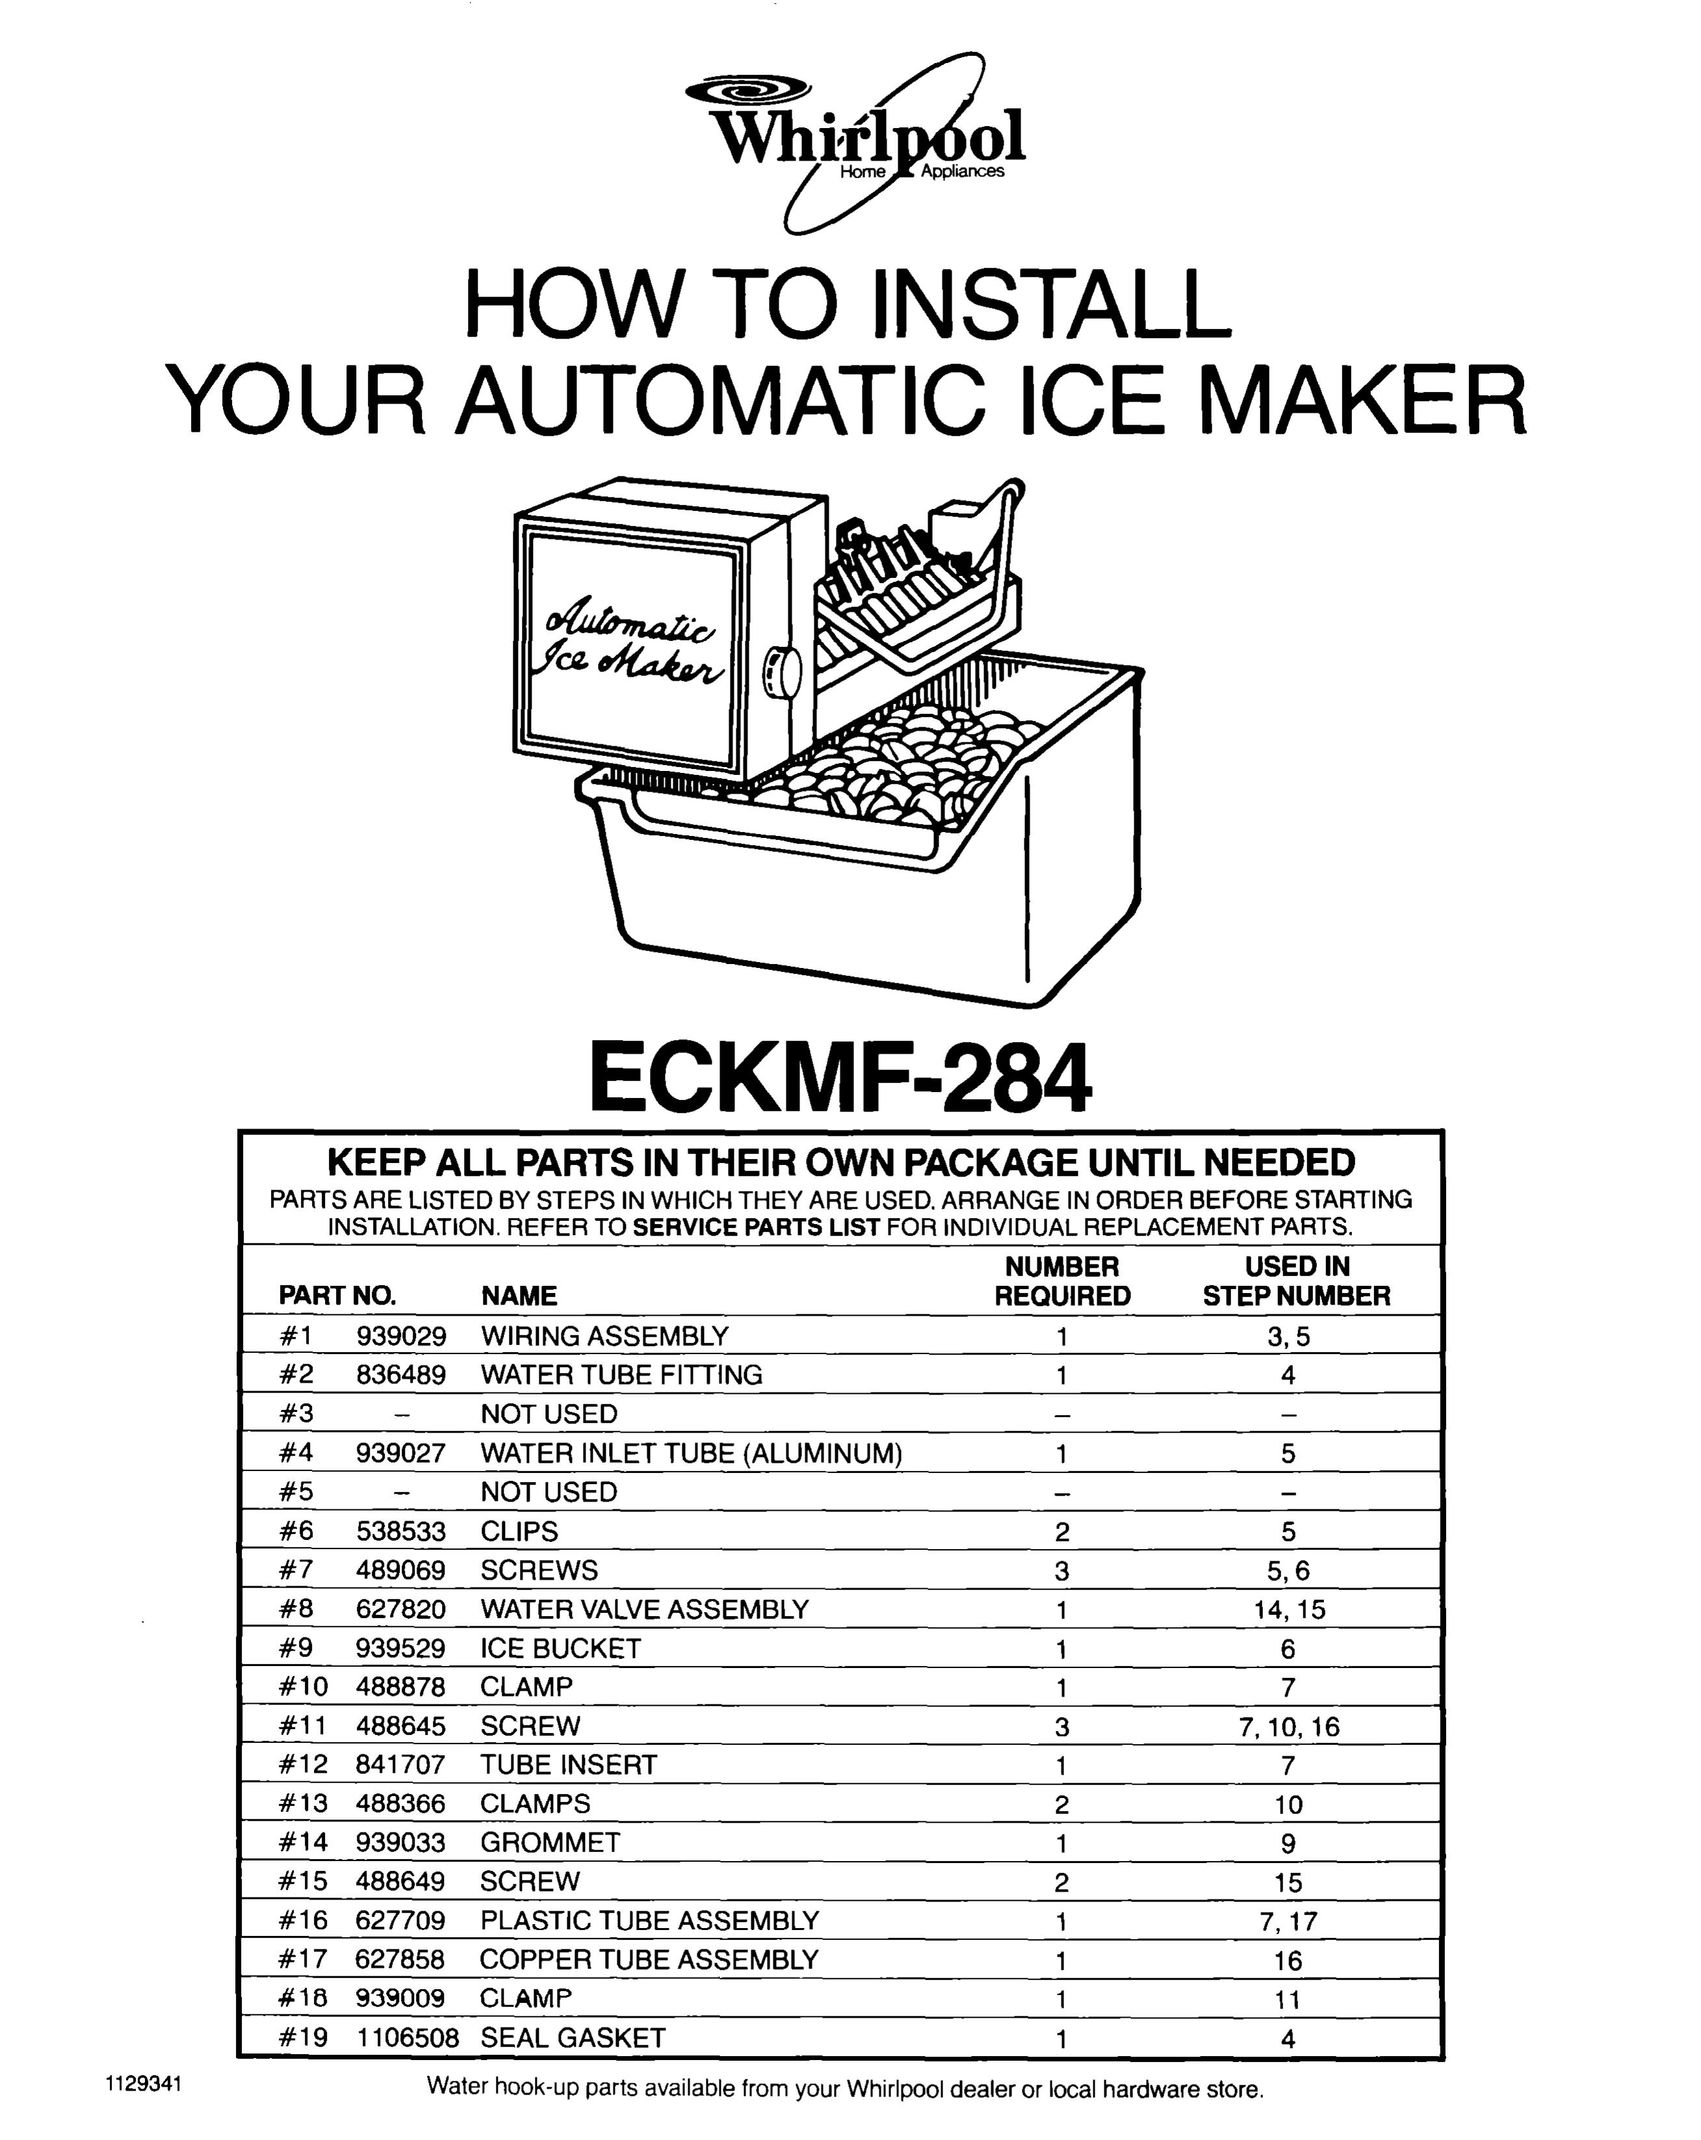 Whirlpool ECKMF-284 Ice Maker User Manual